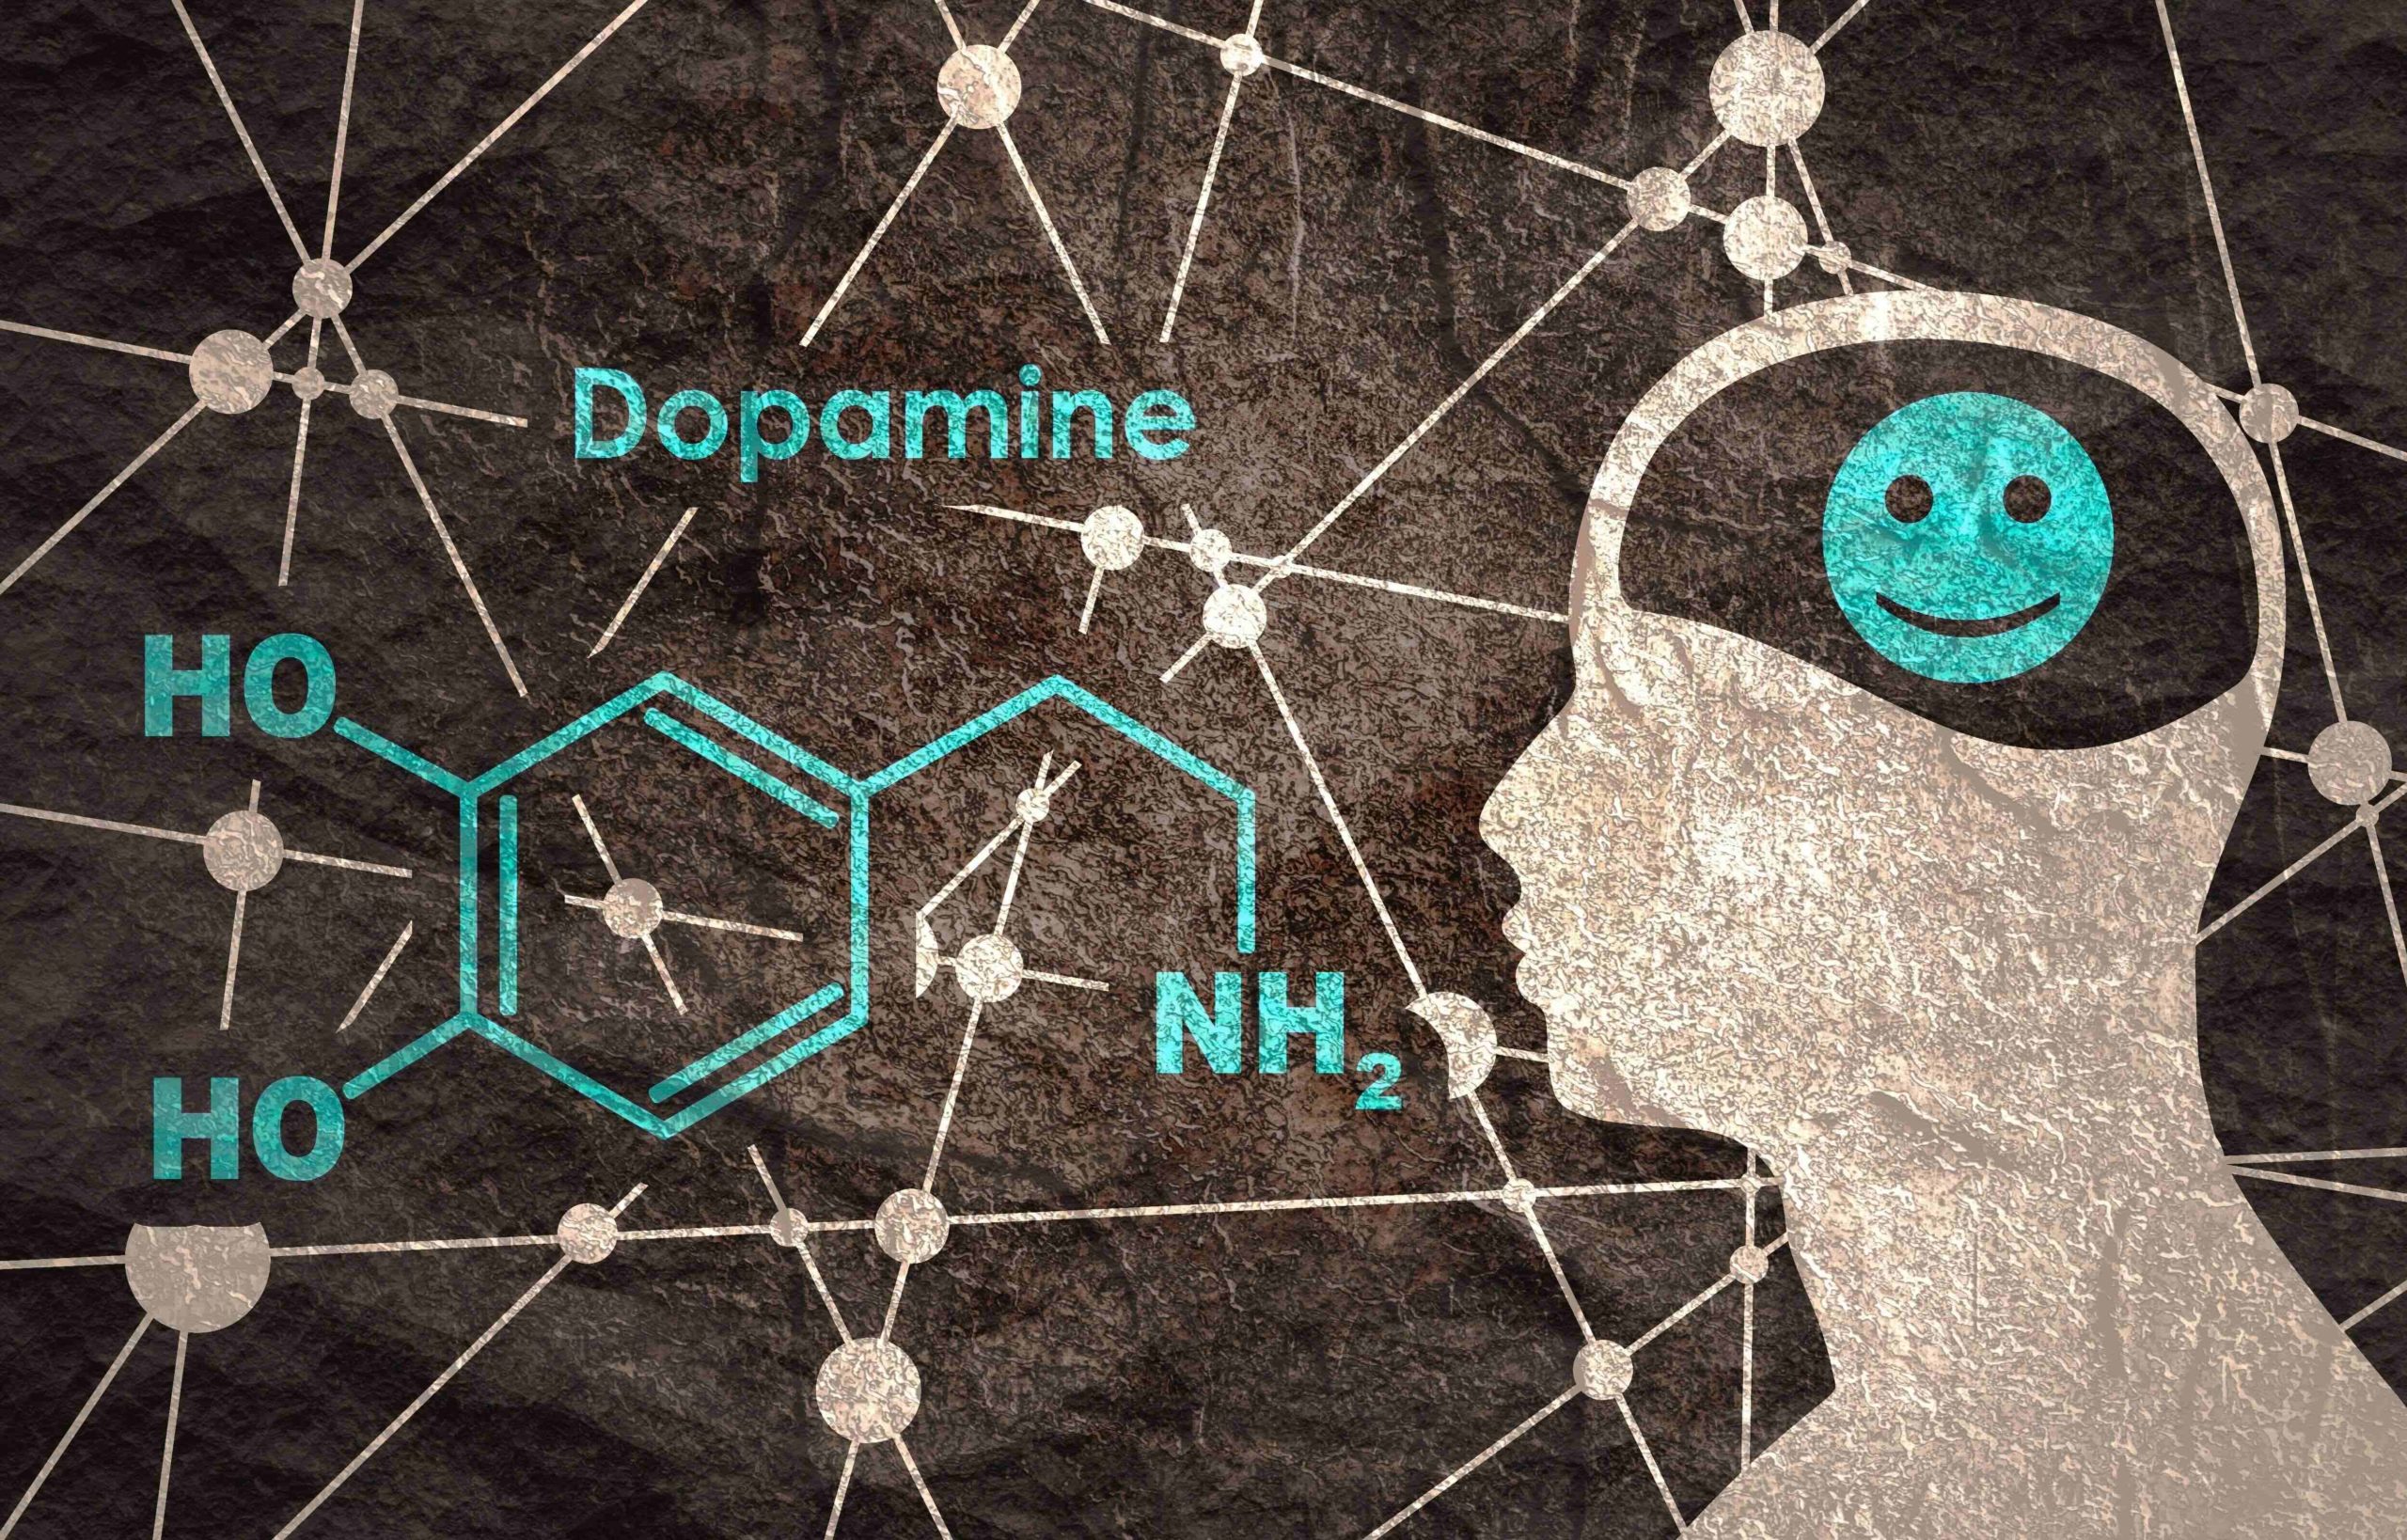 5 Atremoplus dopamine la molécule du bonheur scaled - AtremoPlus : La L-Dopa, précurseur de la Dopamine aussi appelée la "molécule du bonheur" !